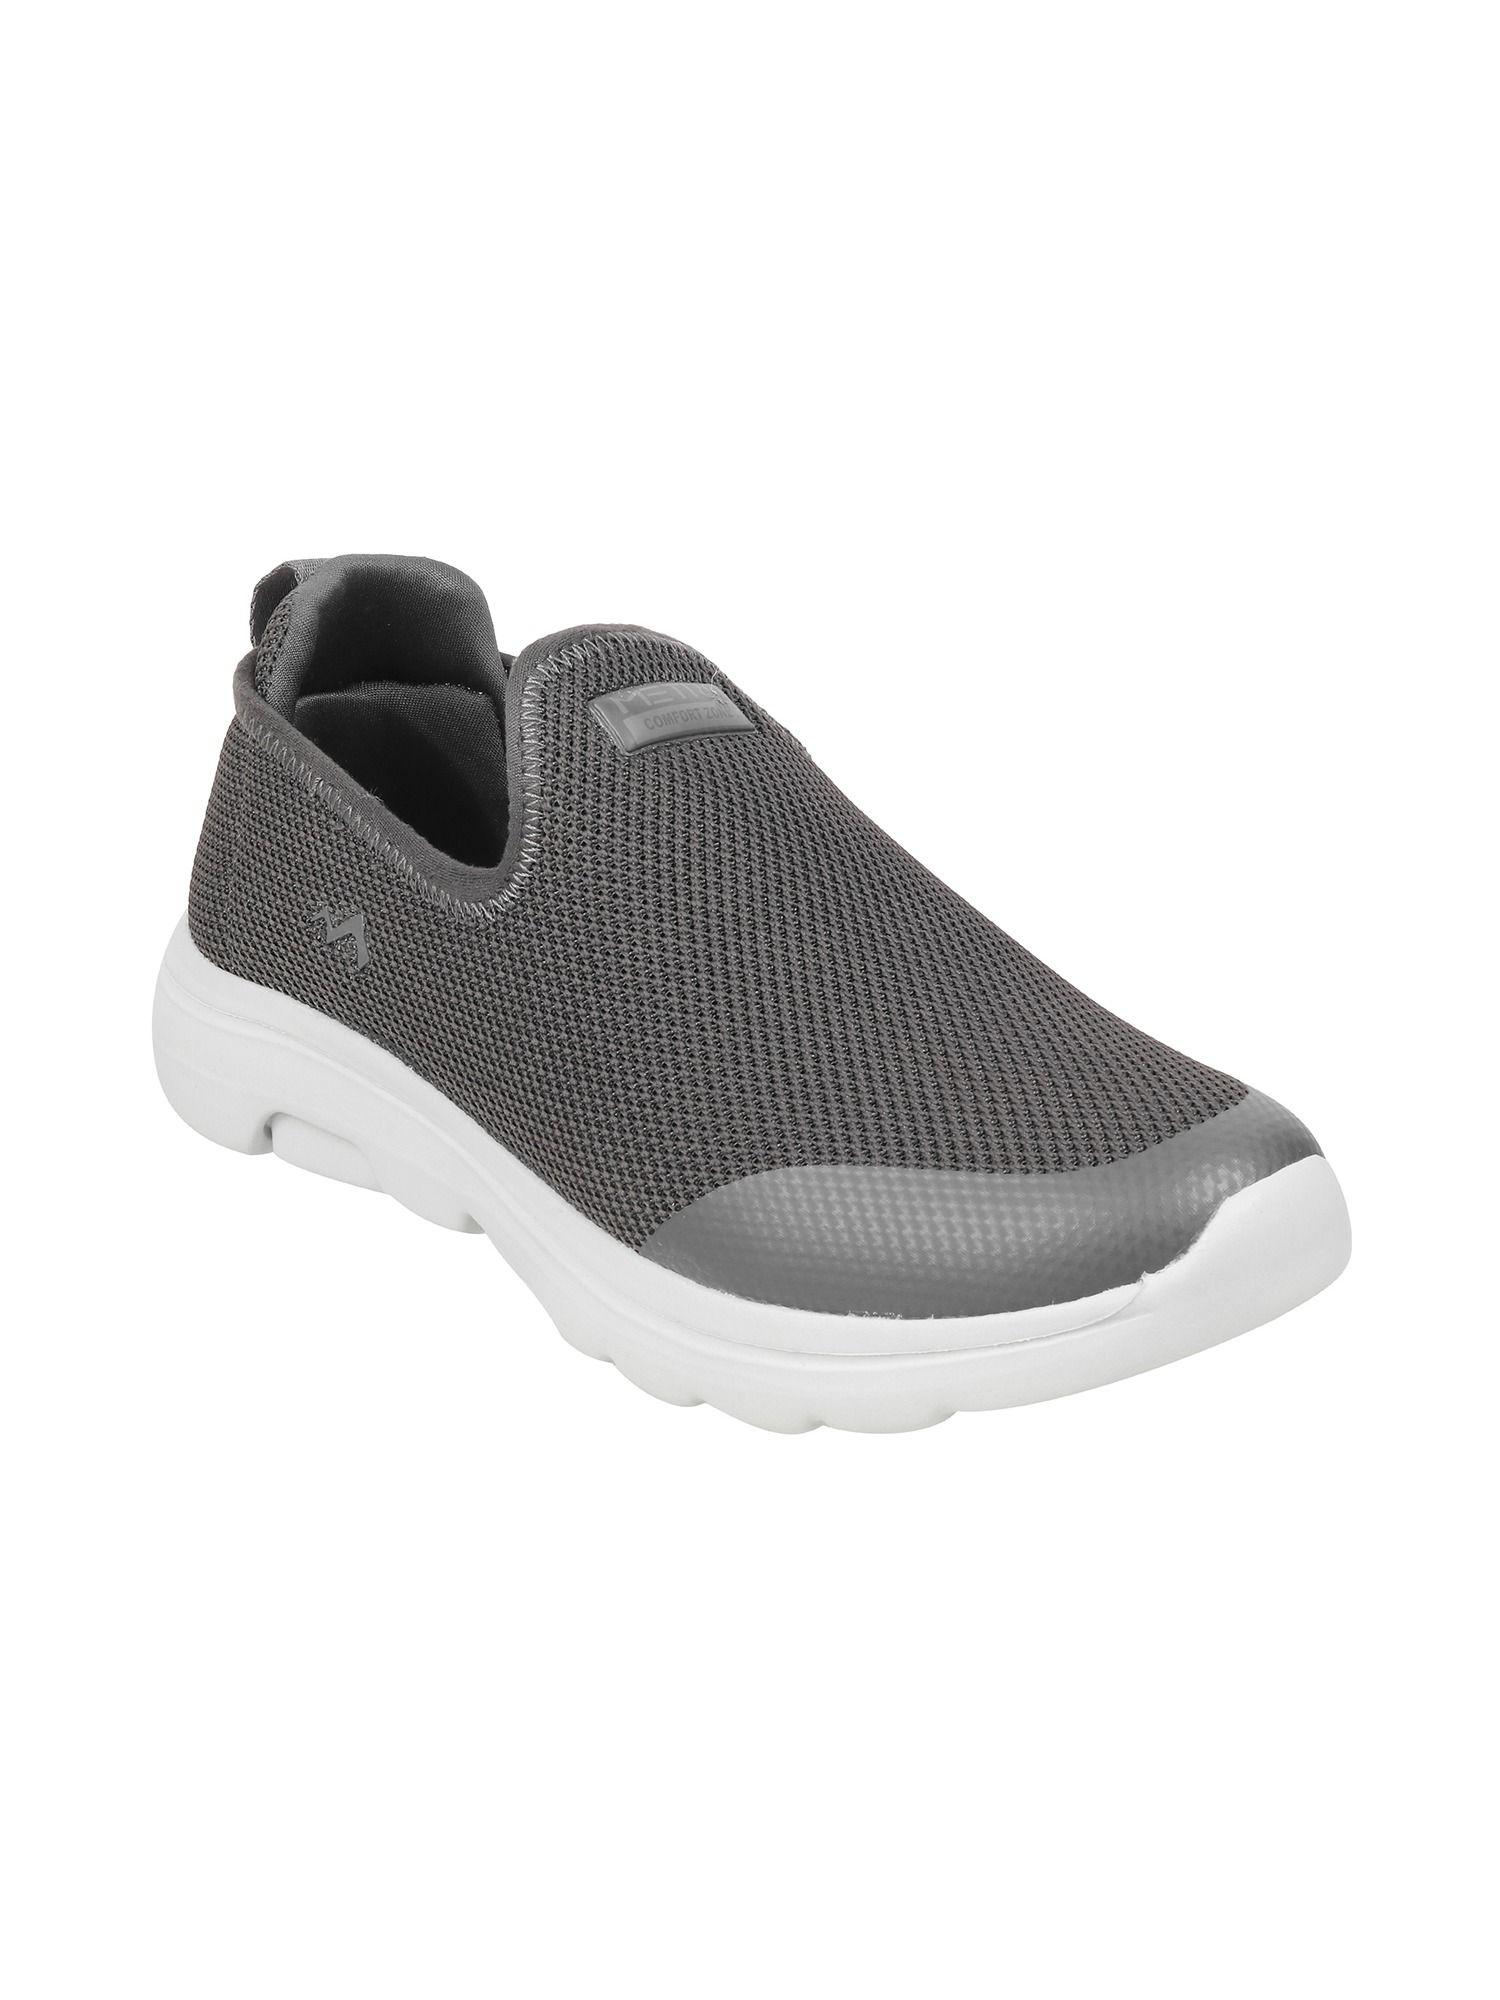 woven-grey-sneakers